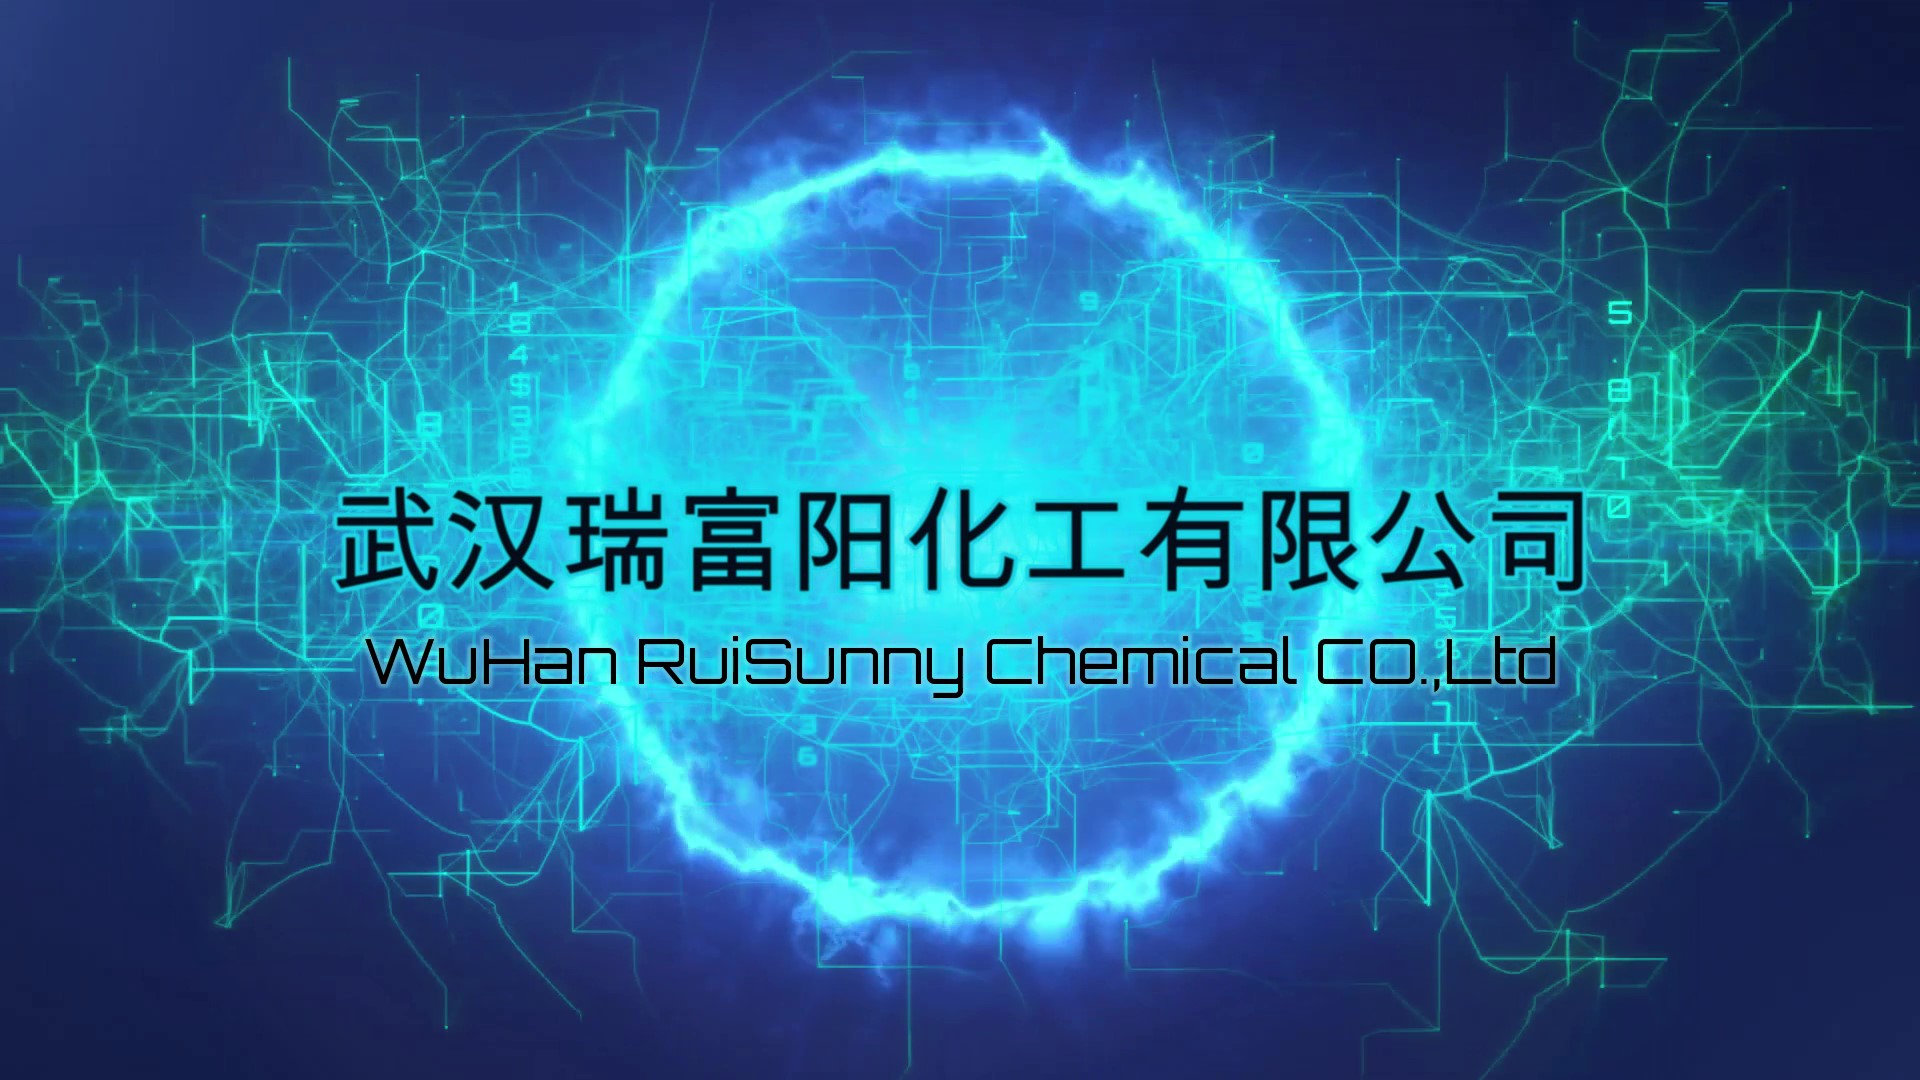 Wuhan Rui Sunny Chemical Co., Ltd.